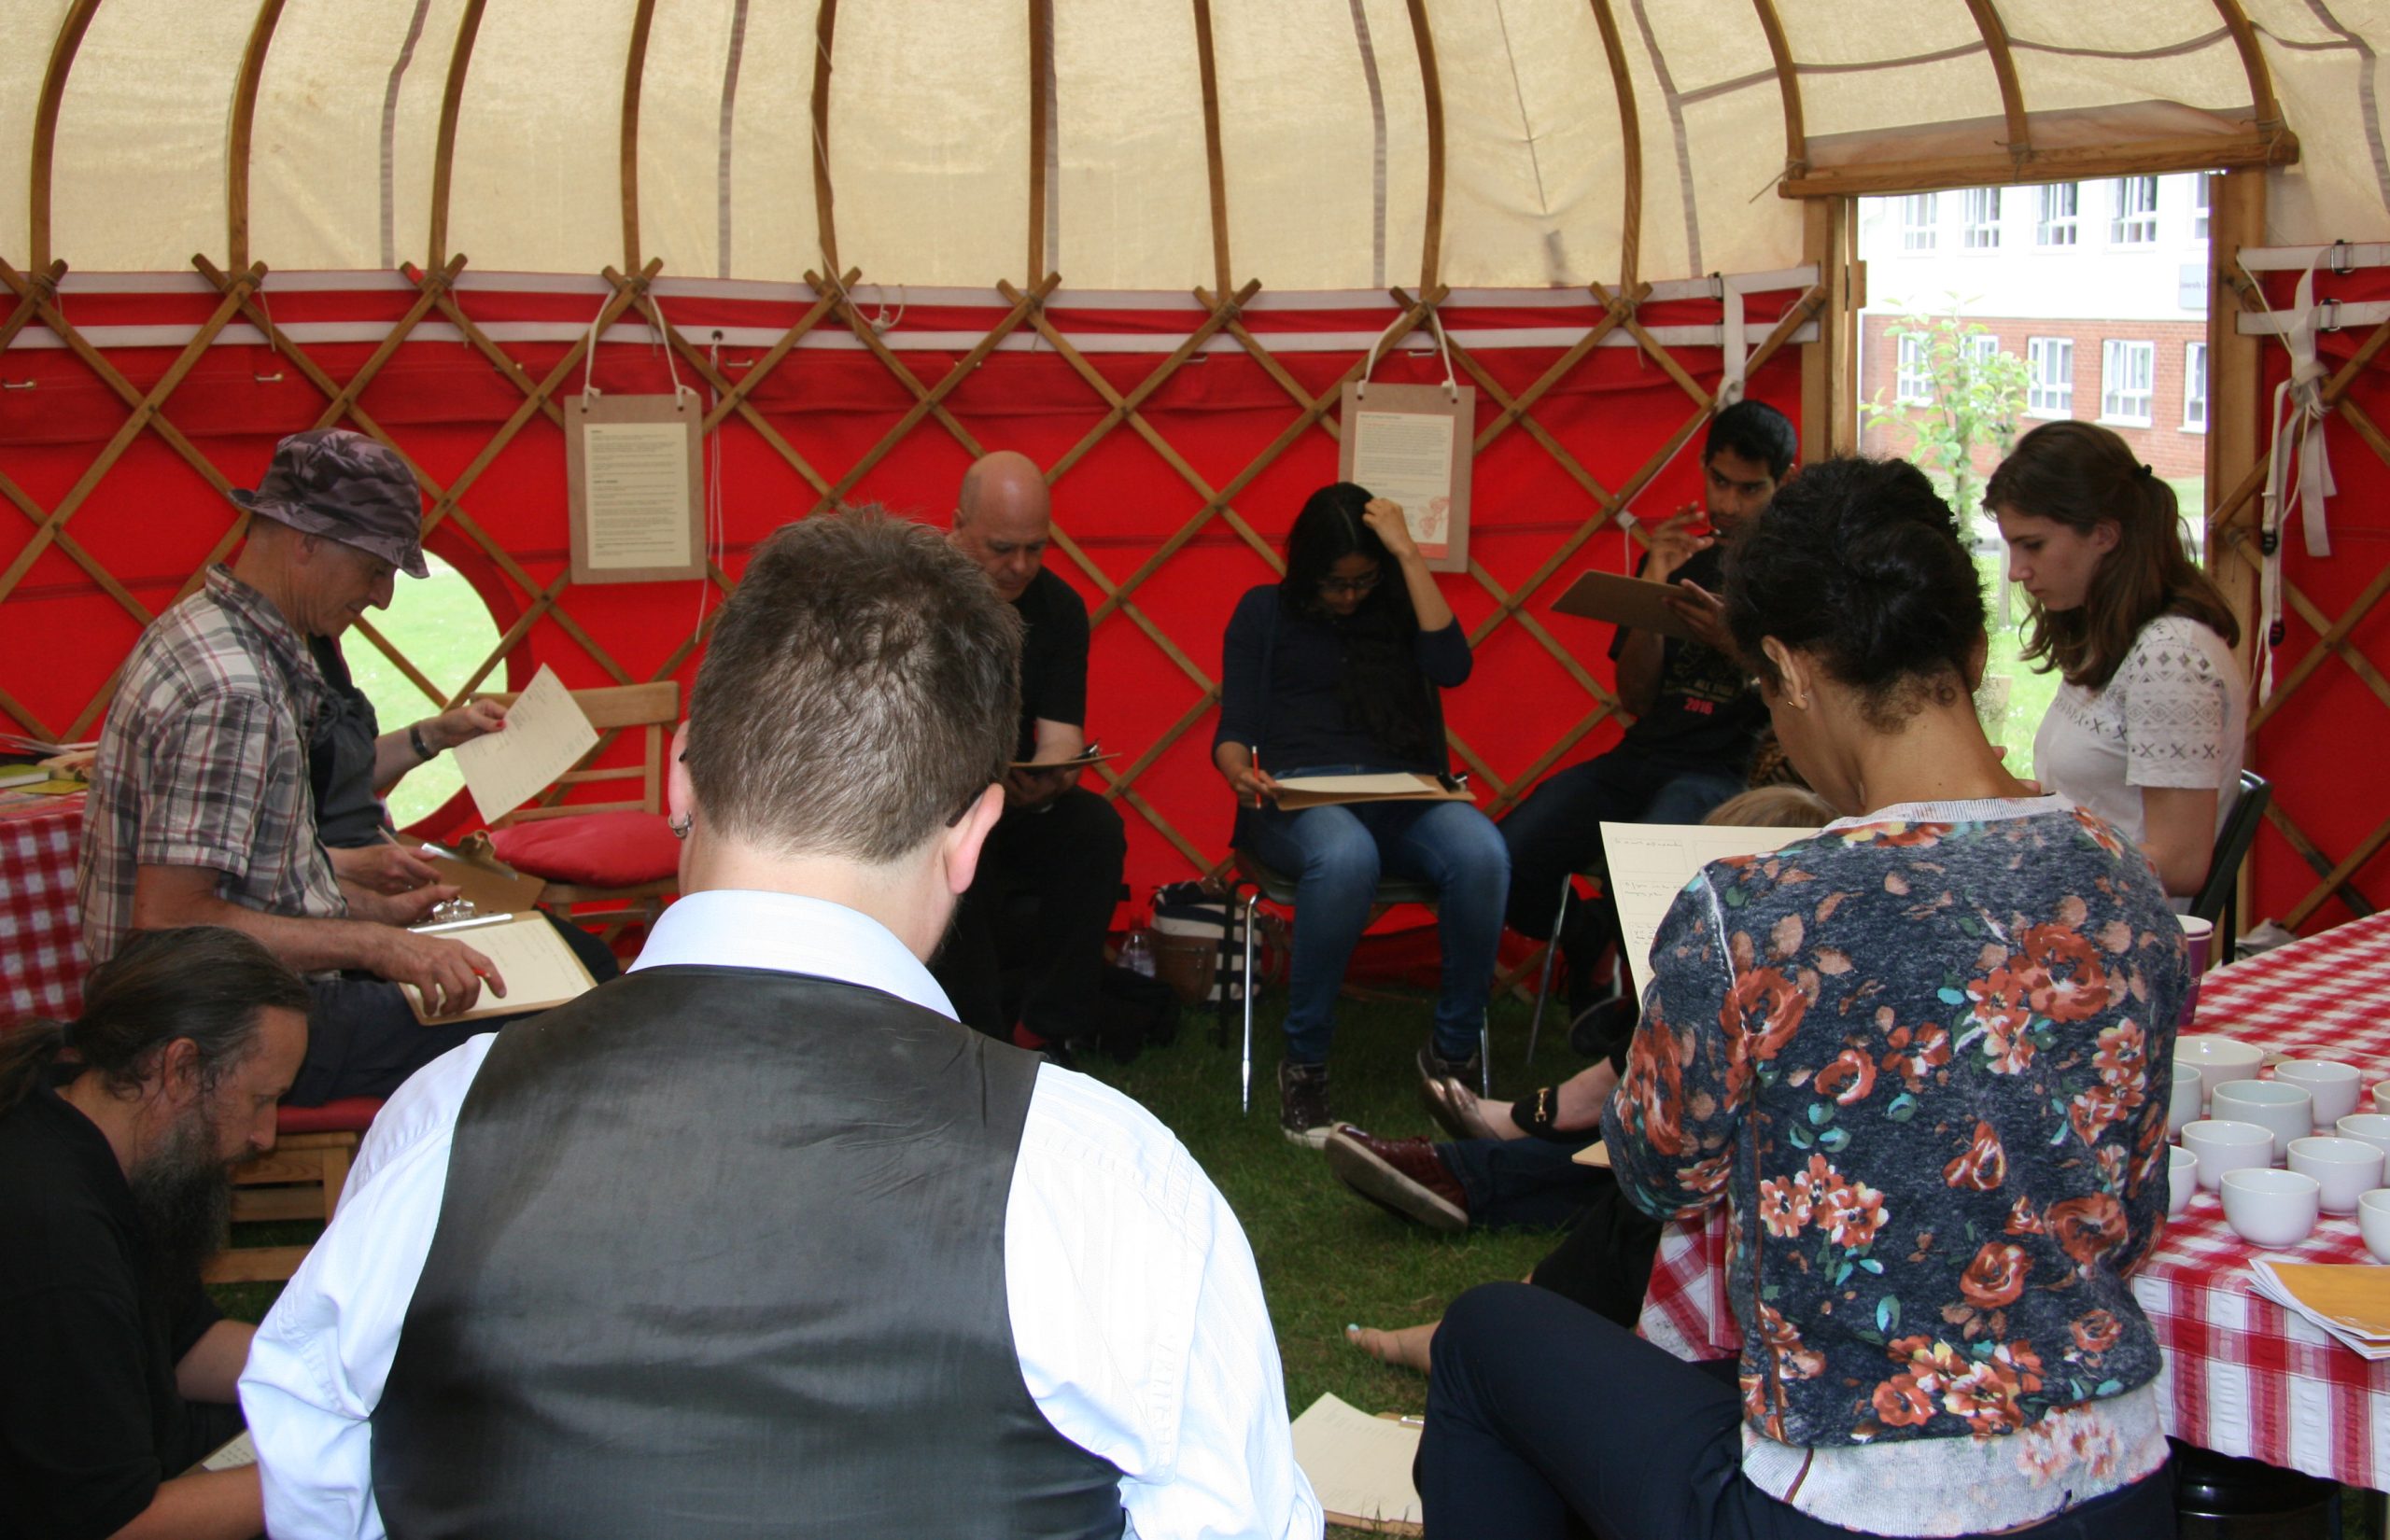 People sitting inside a yurt